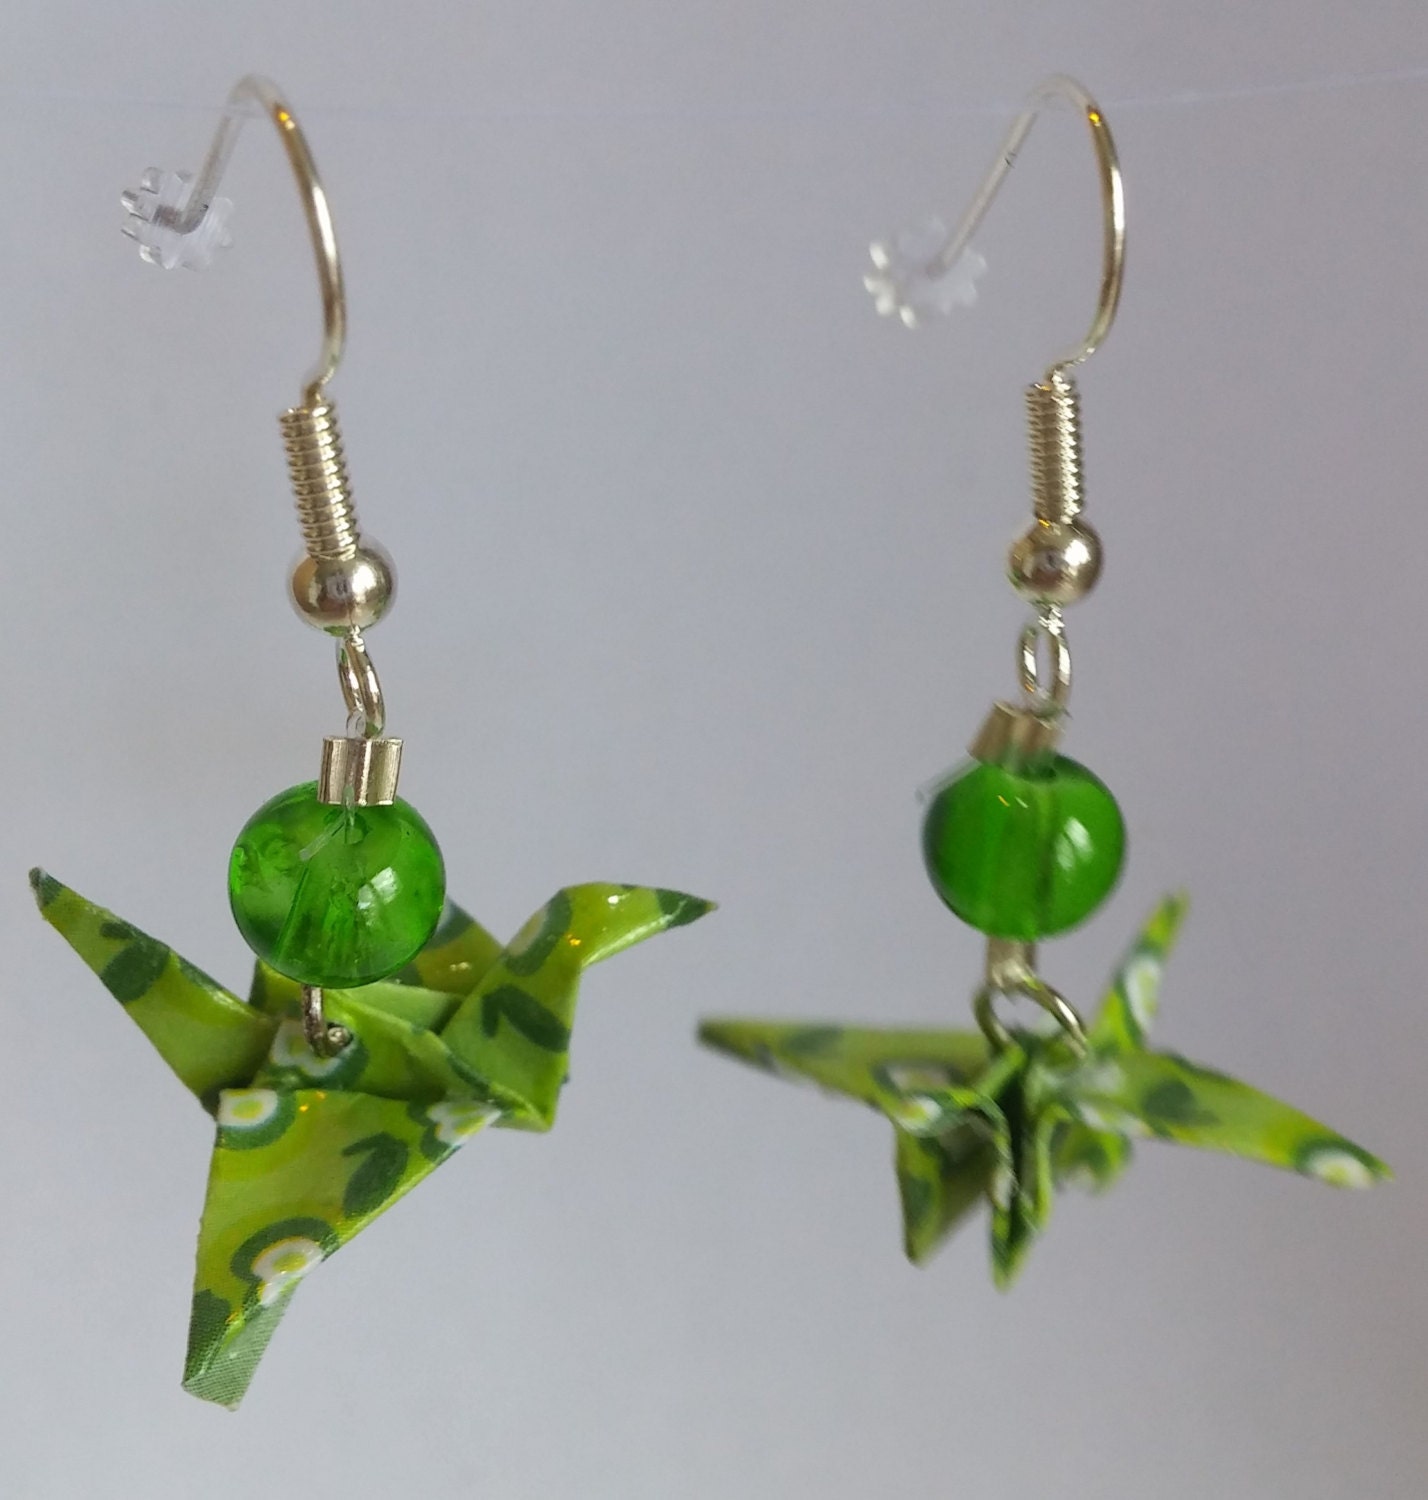 Origami Green Crane dangle earrings with beads